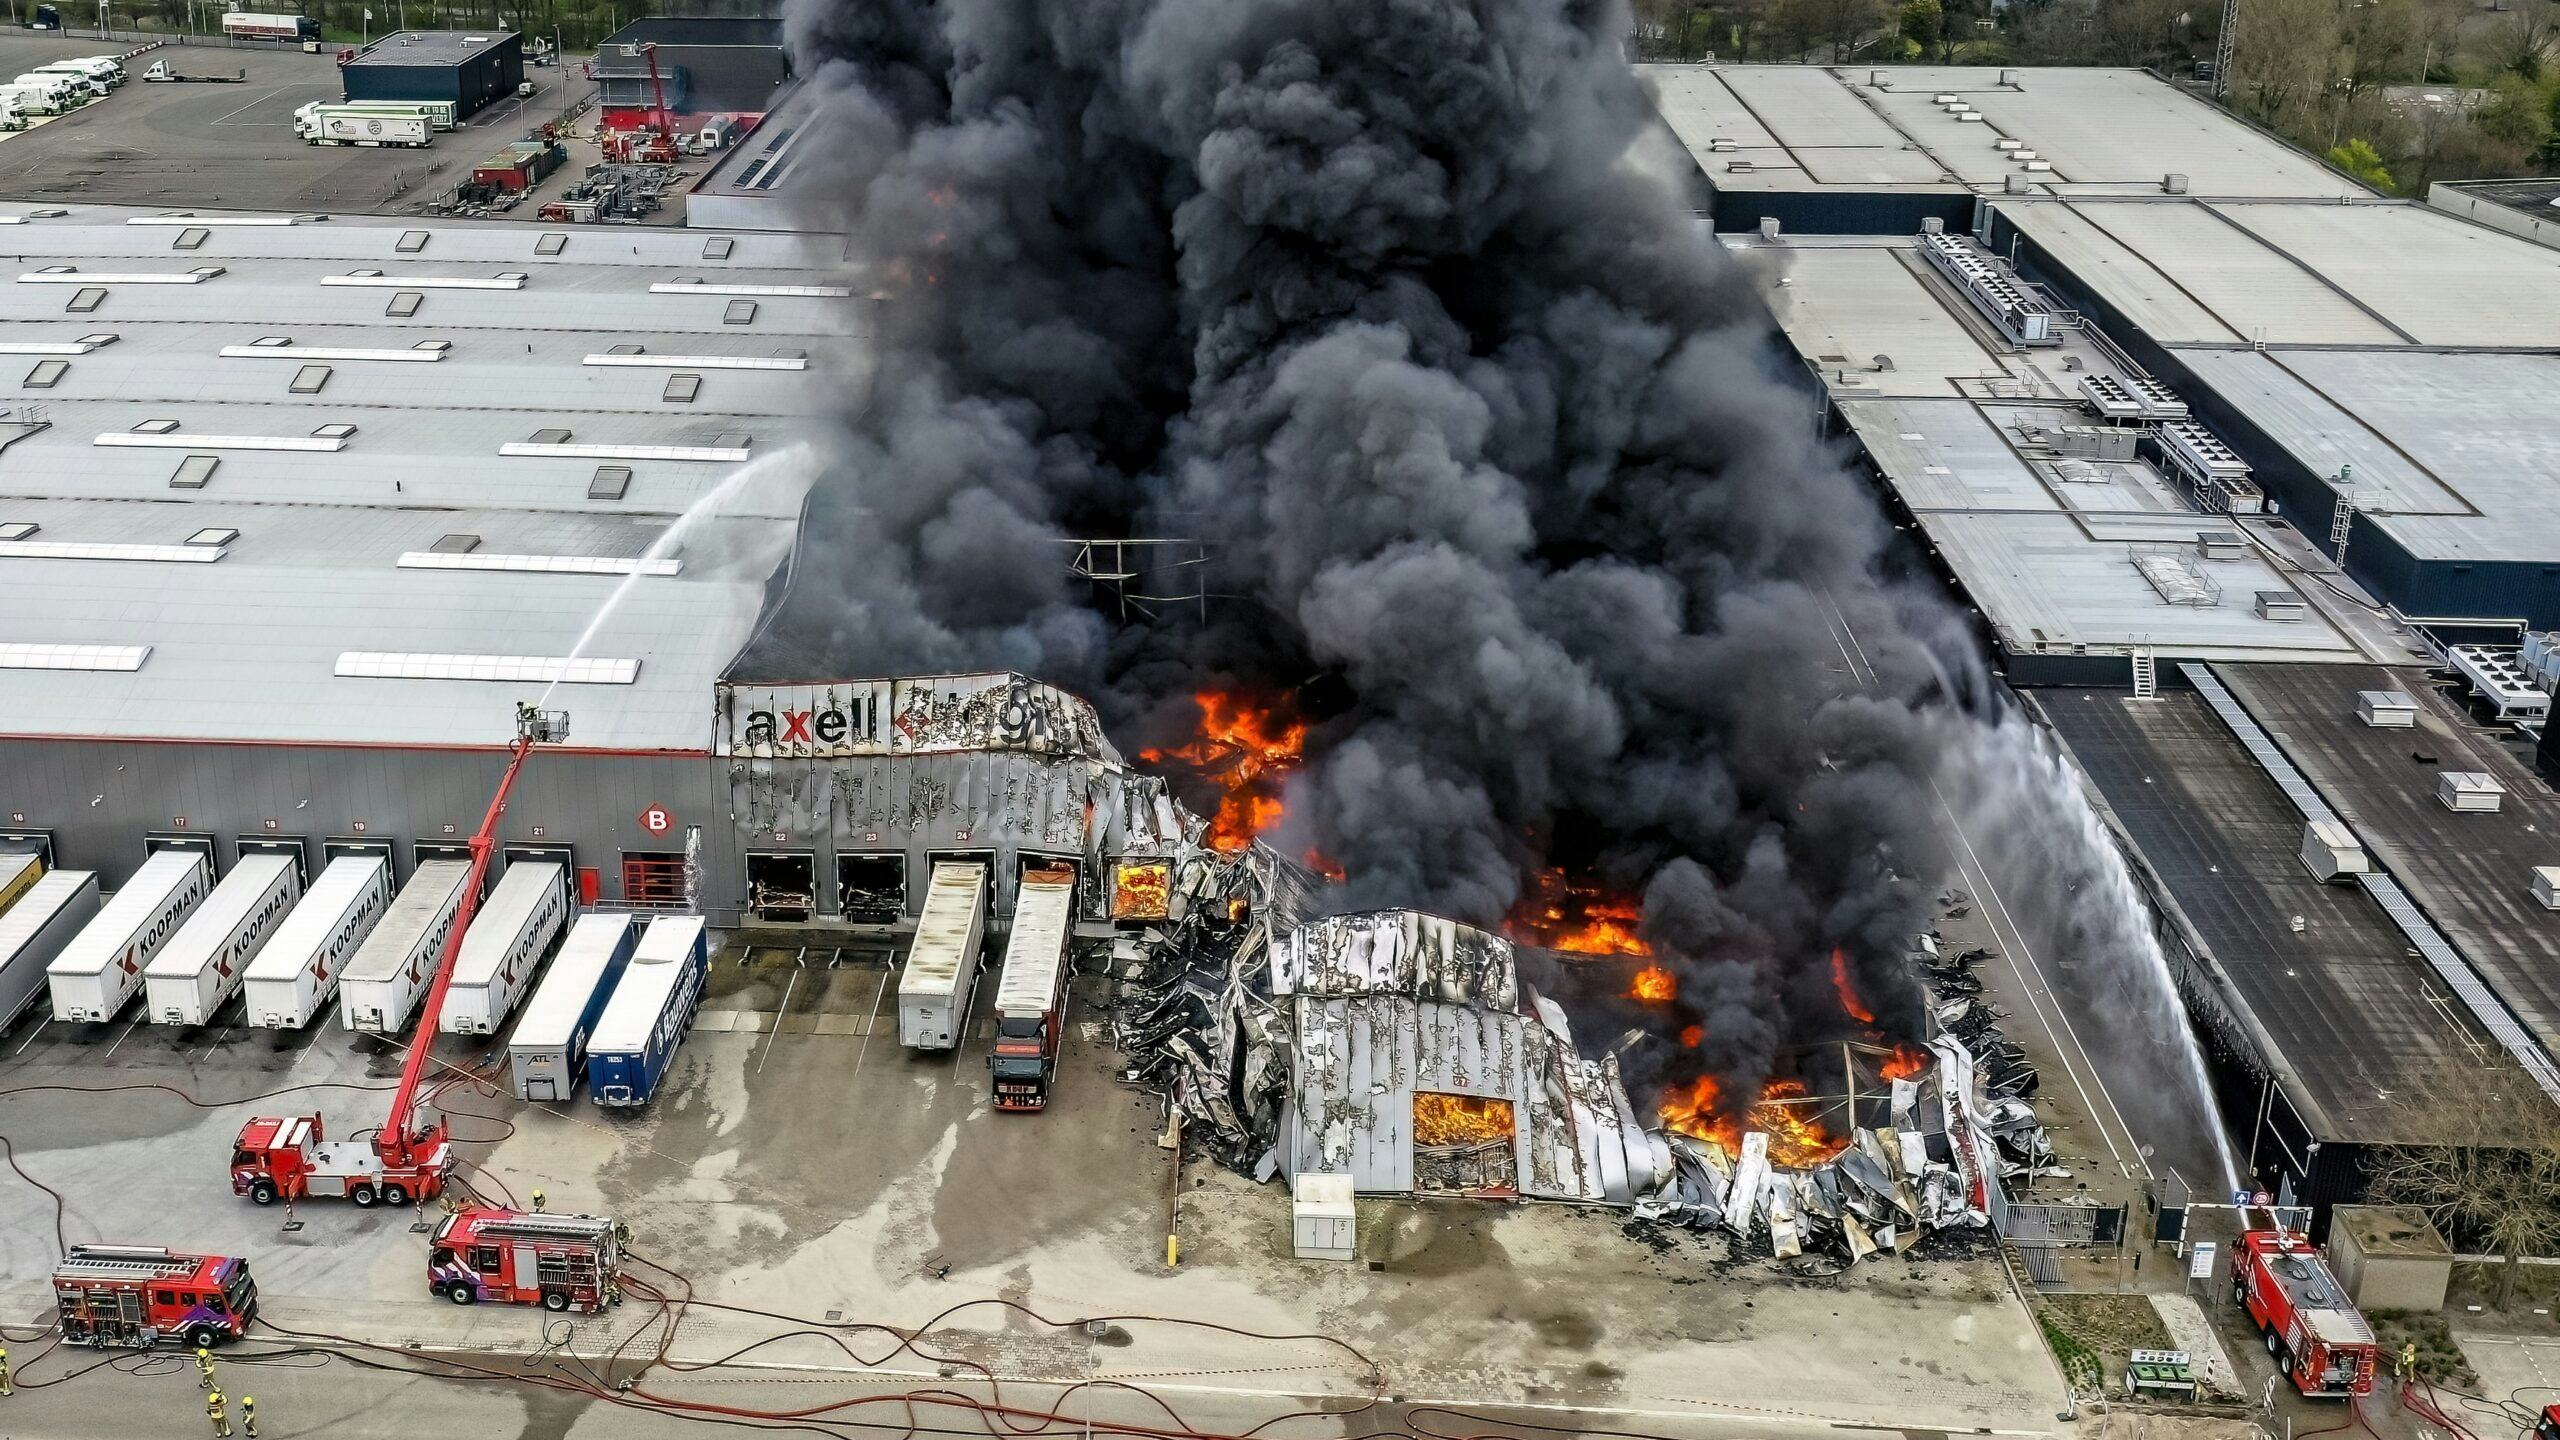 Verwoestende brand bij Axell Logistics in Etten-Leur